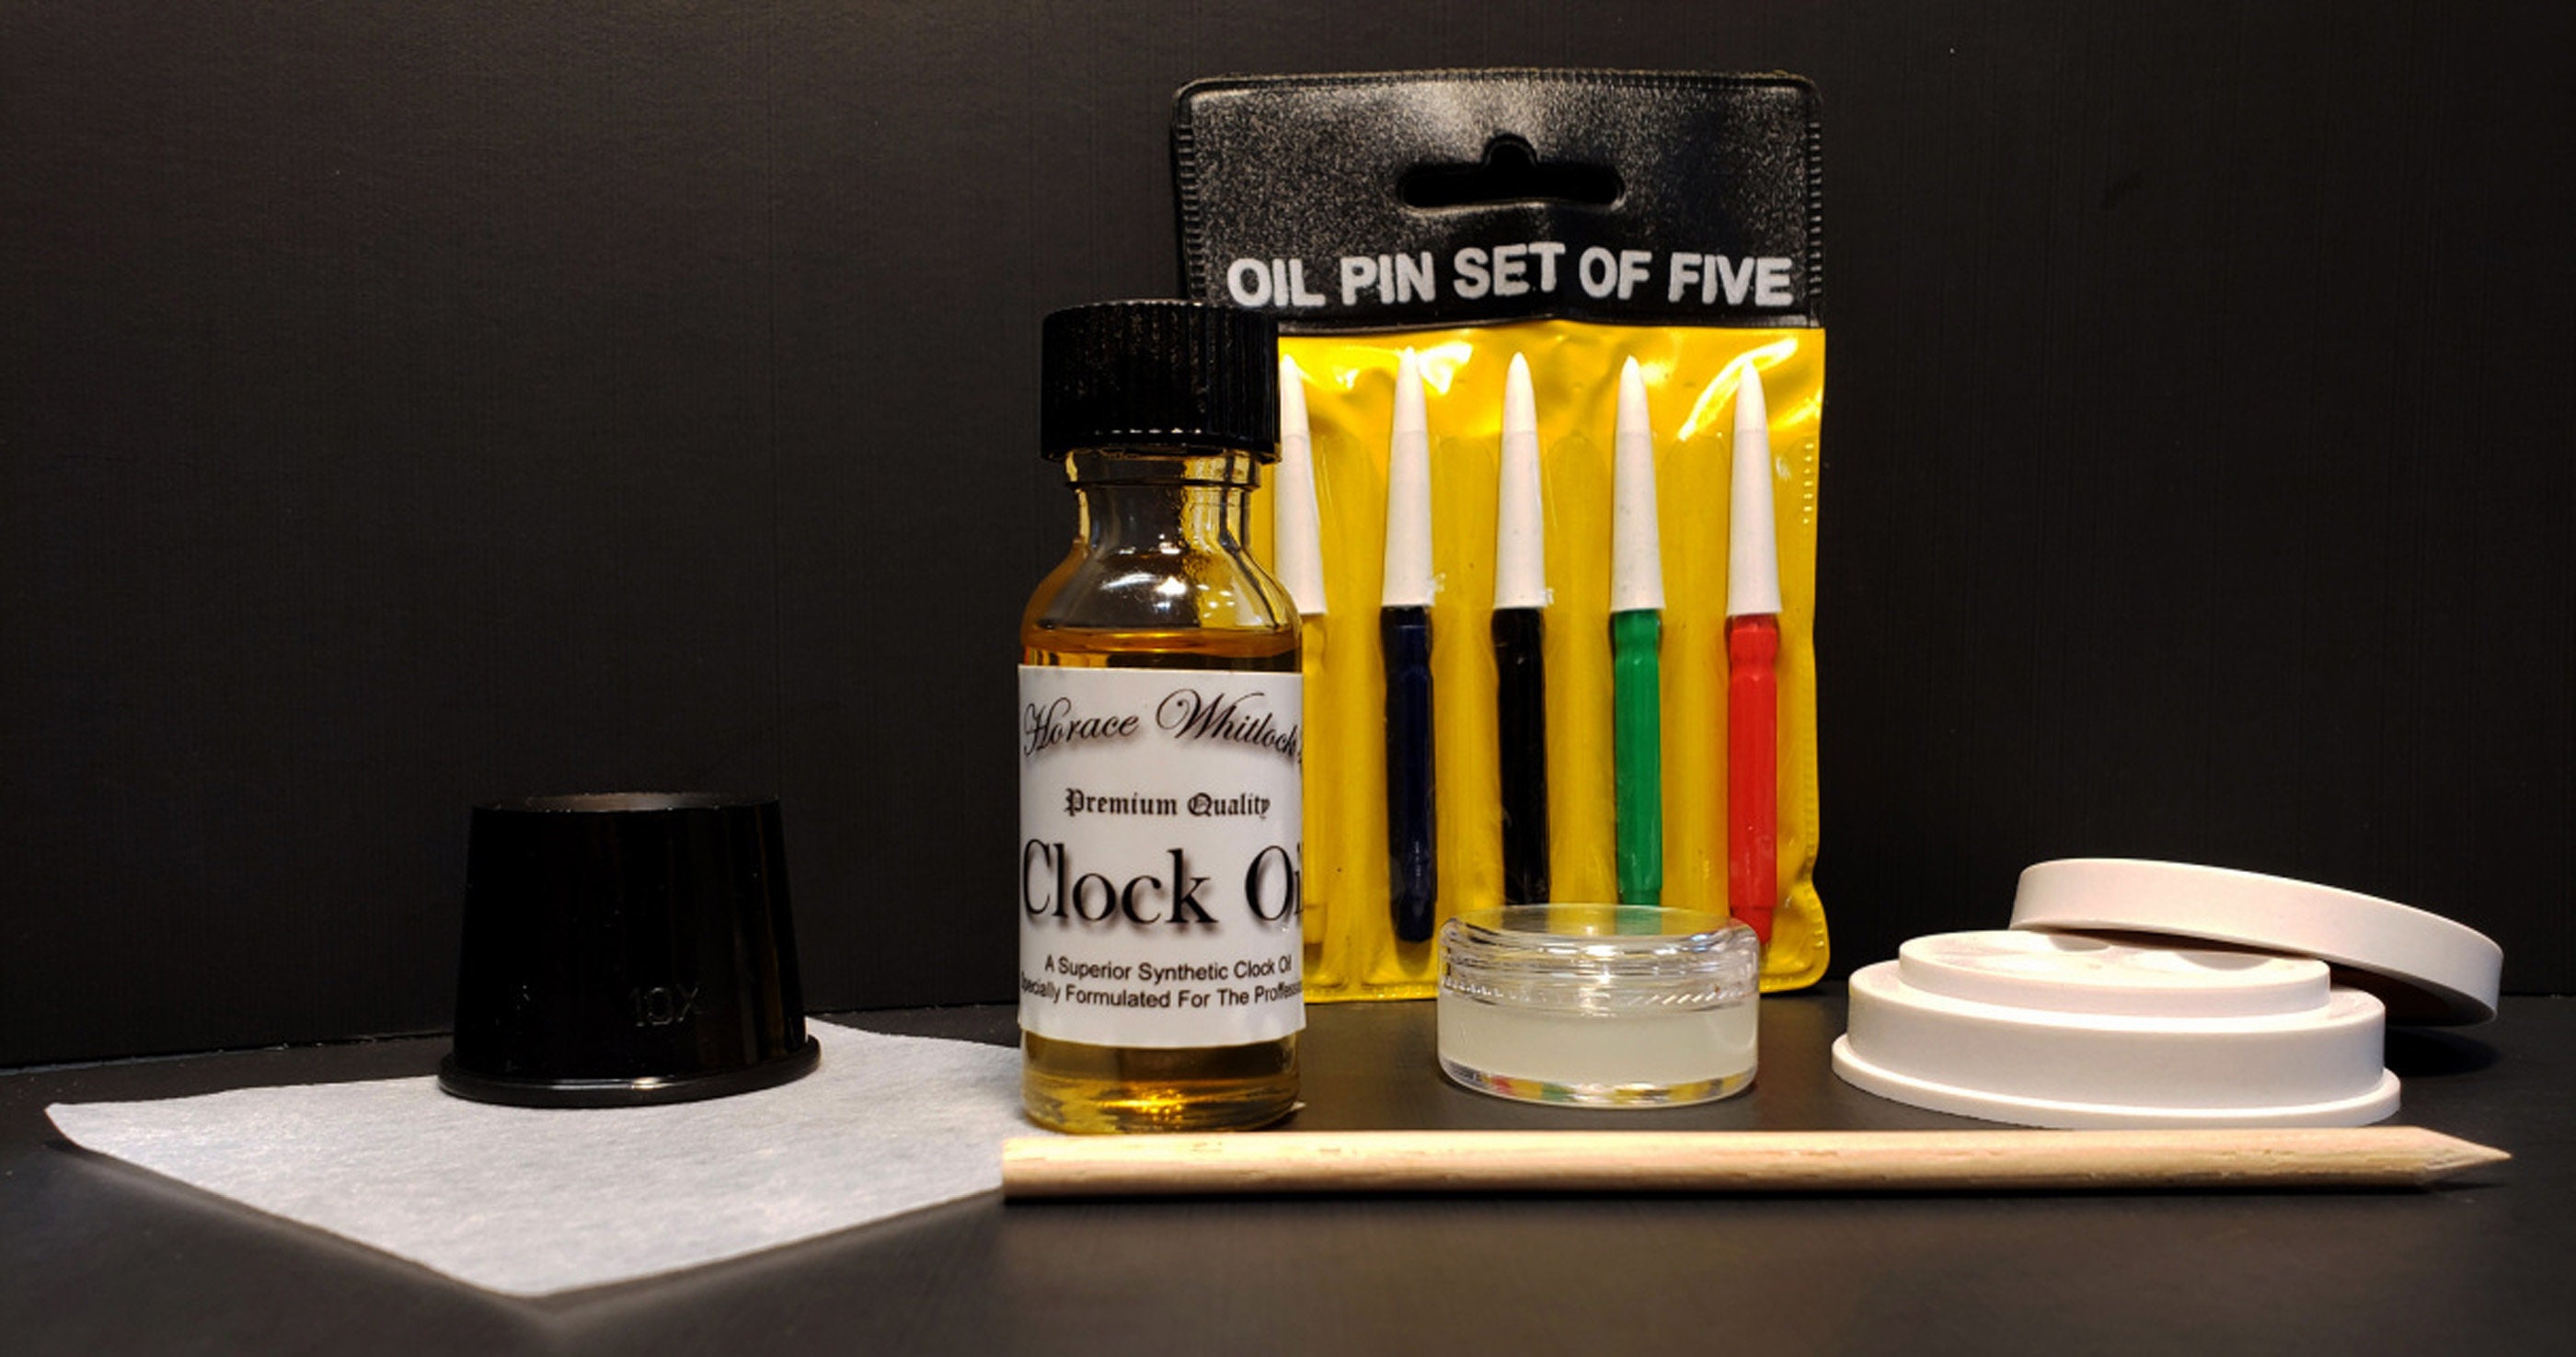  Horace Whitlock's Clock Oil Kit: This kit Comes